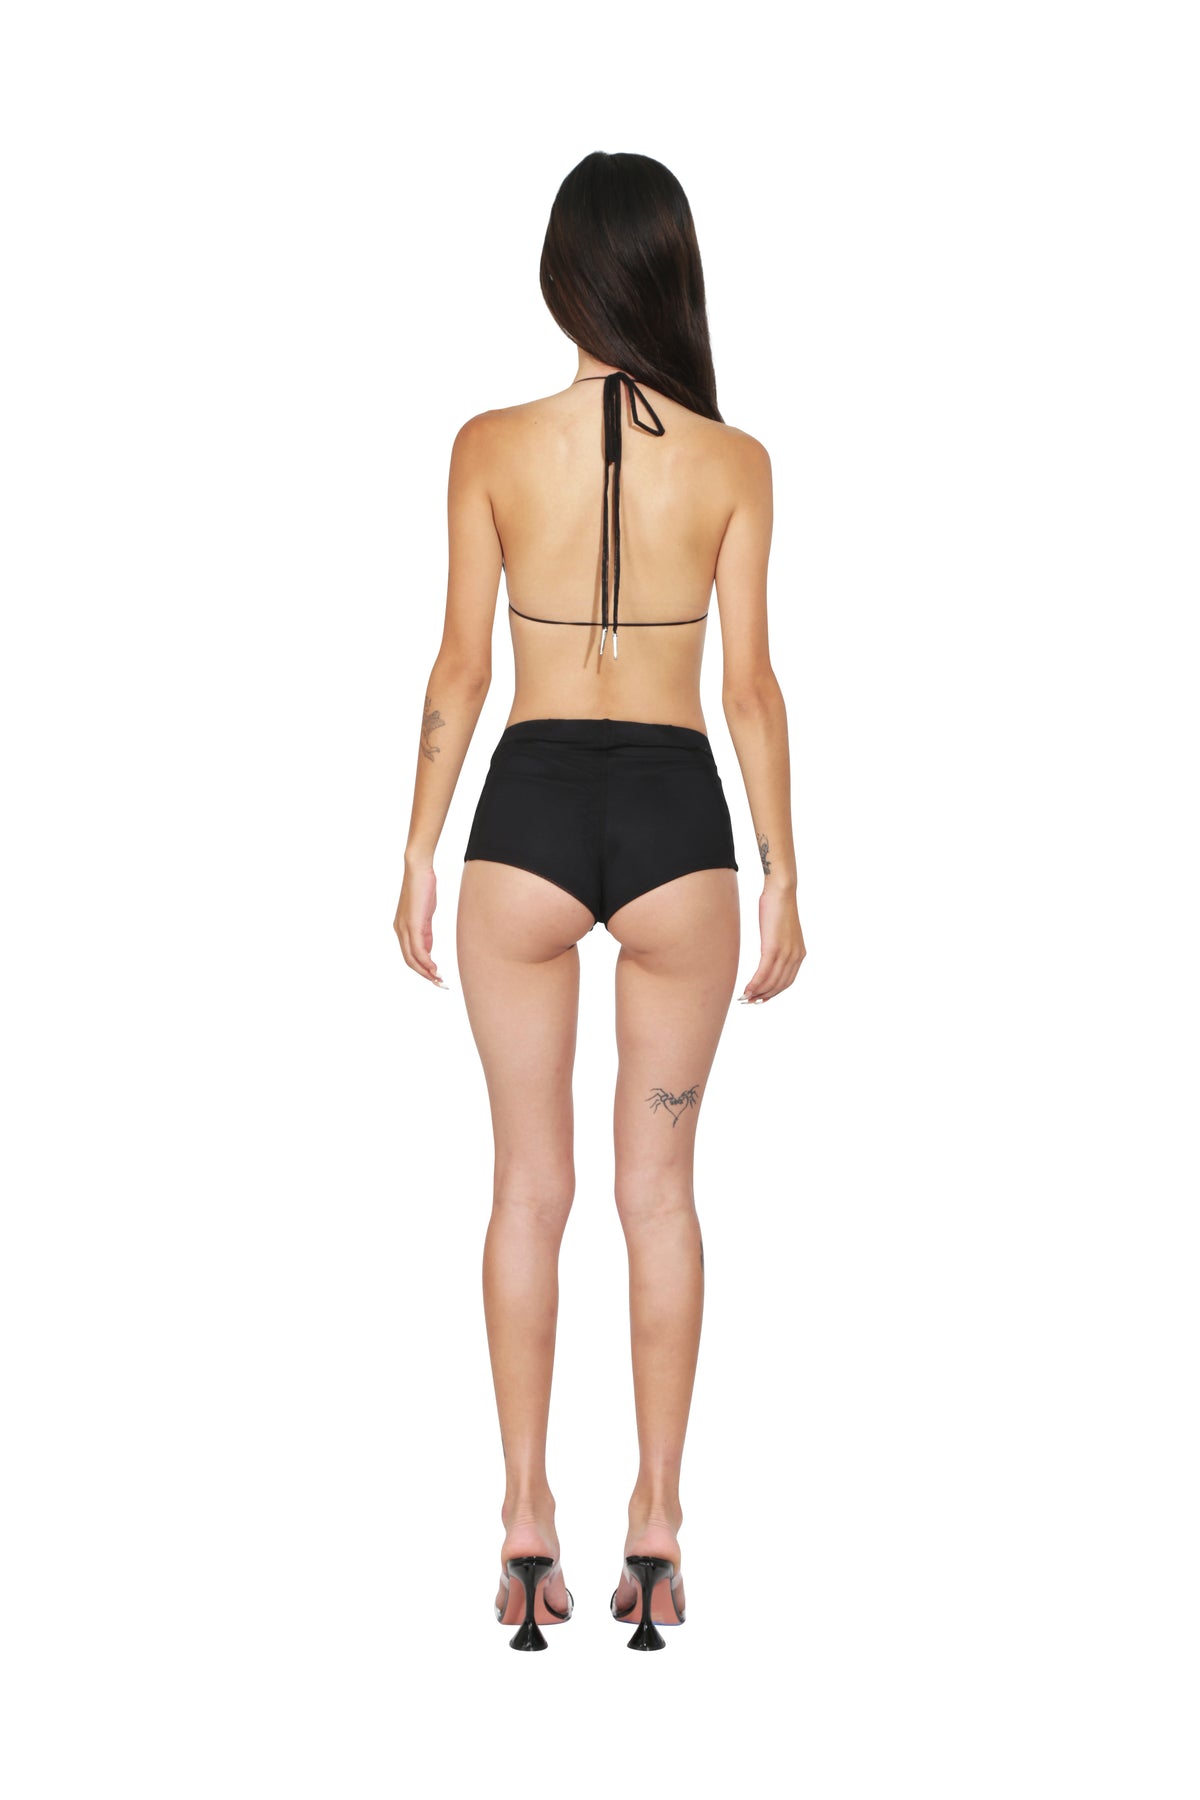 SAMI MIRO VINTAGE Open Seam String Bikini Top in Black